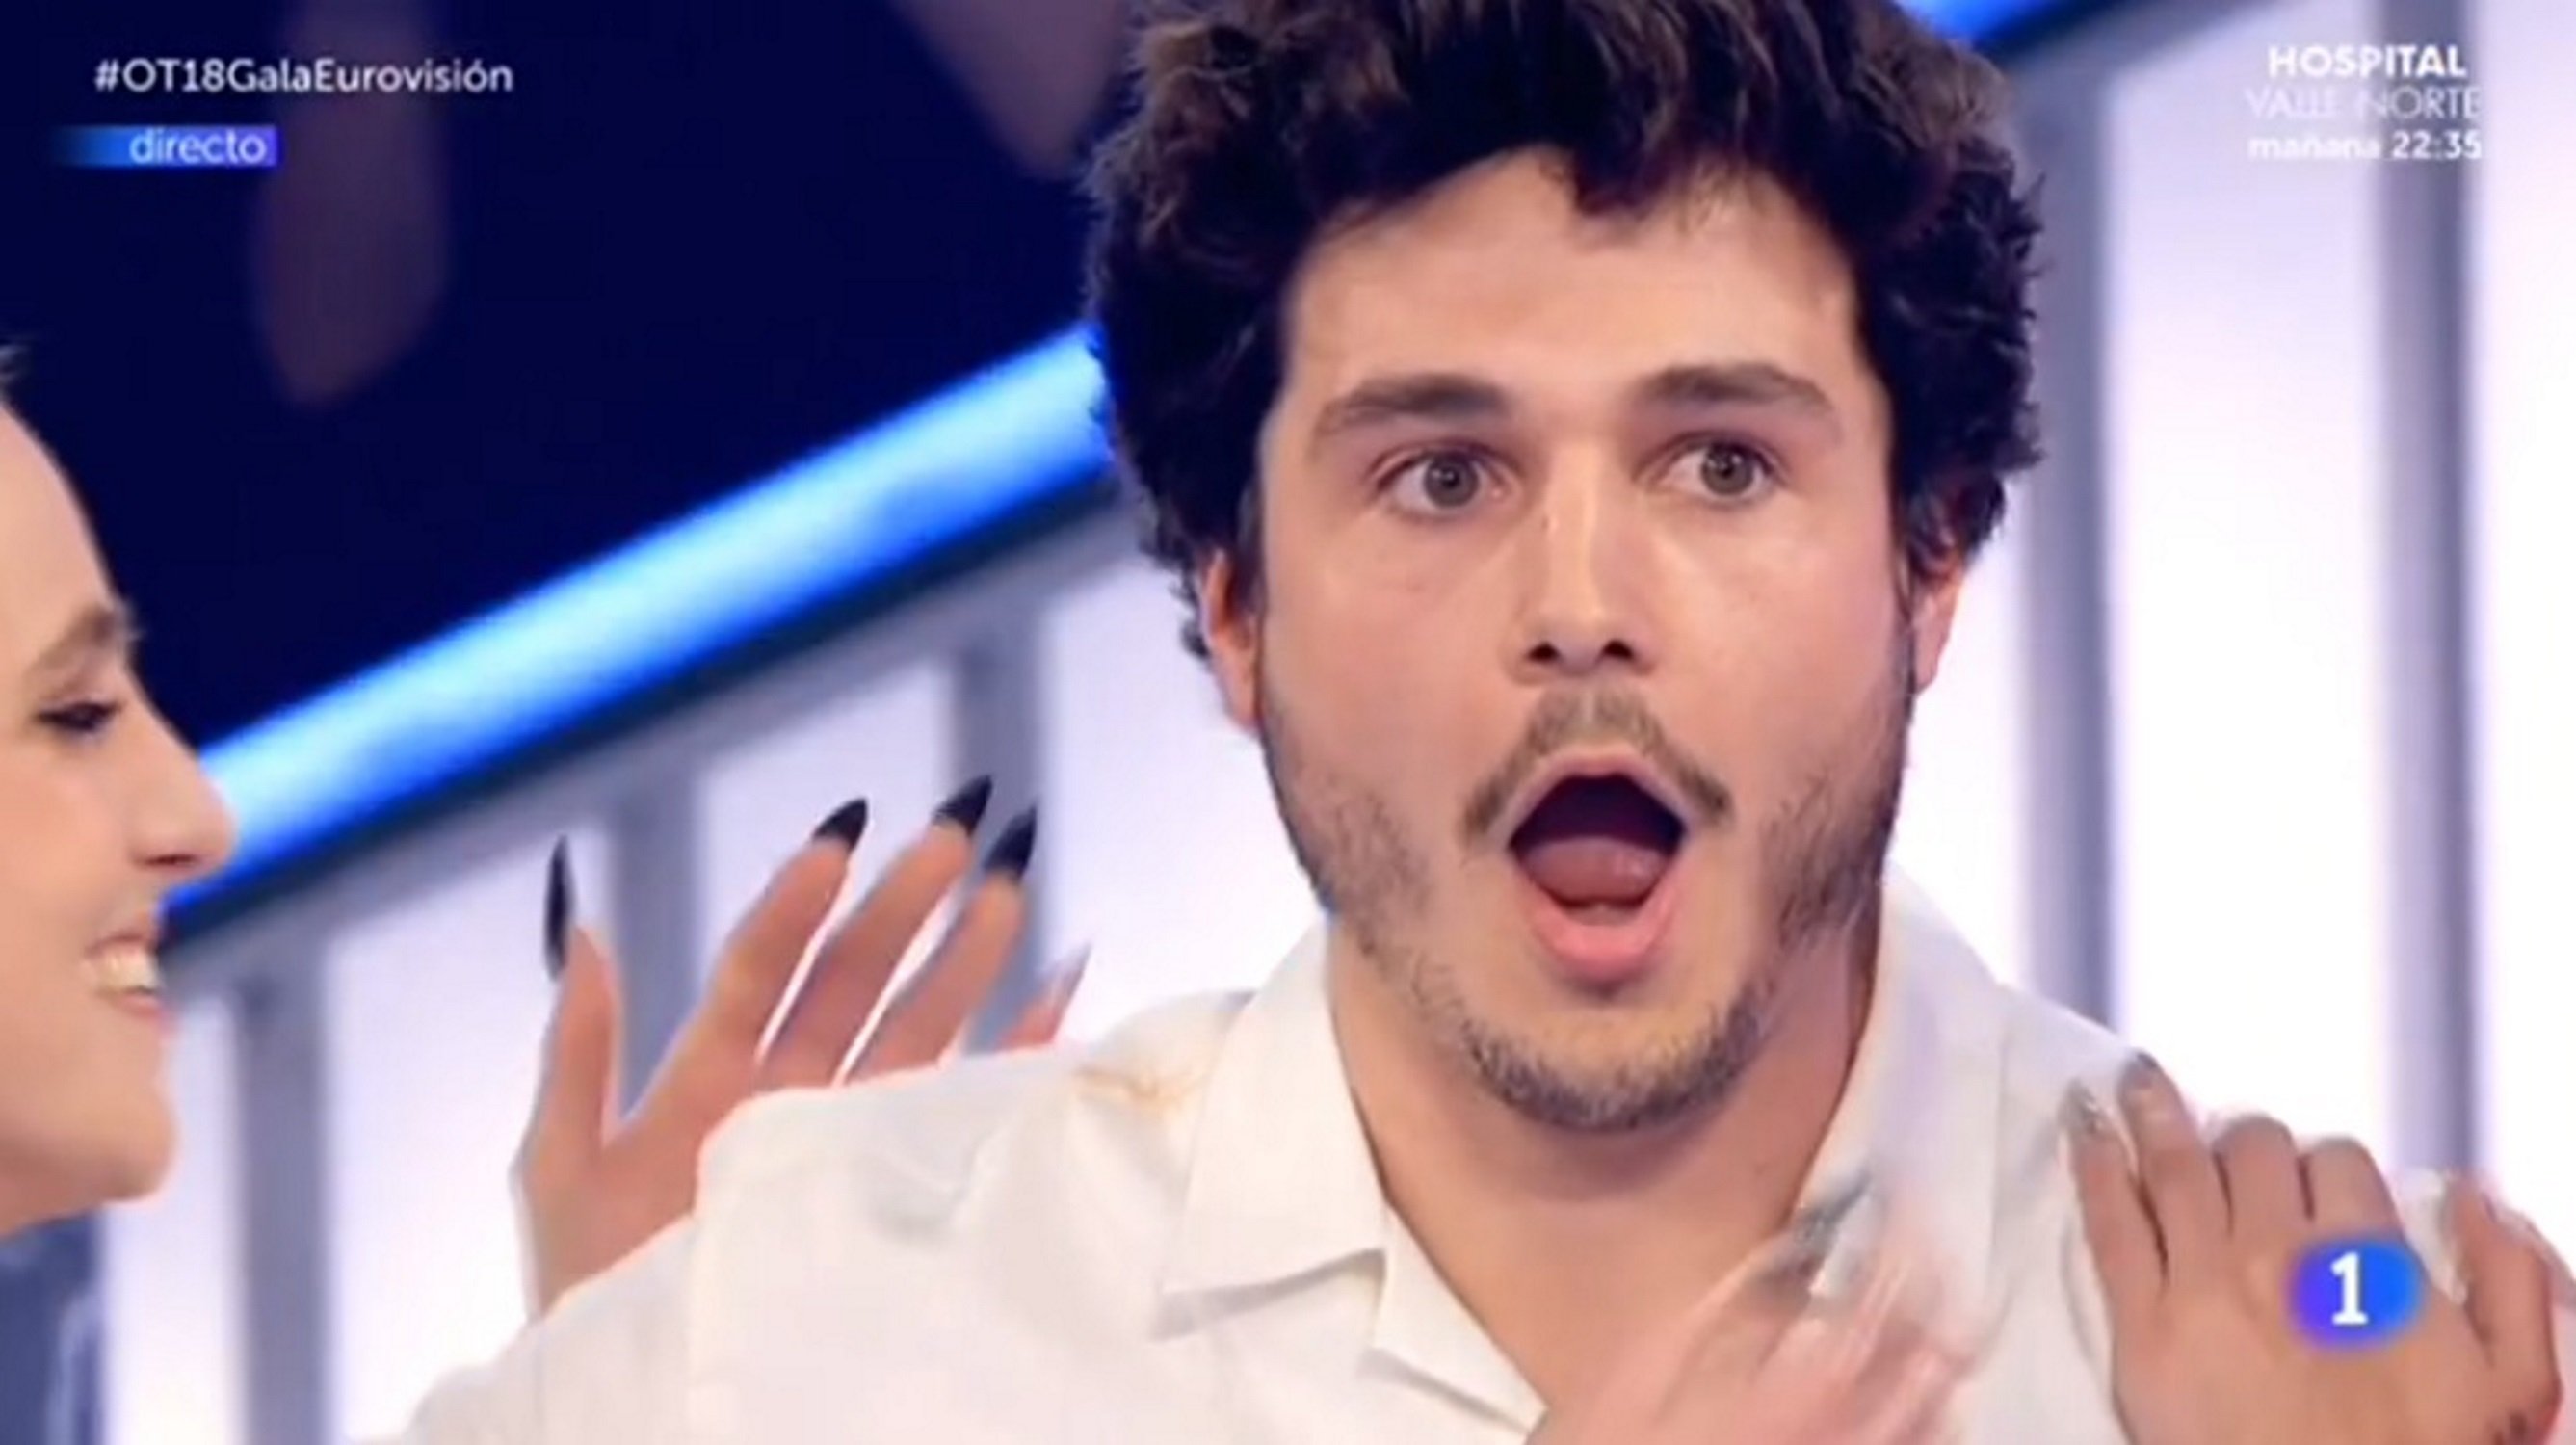 El famoso cantante español que irá a Eurovisión después del 'indepe' Miki